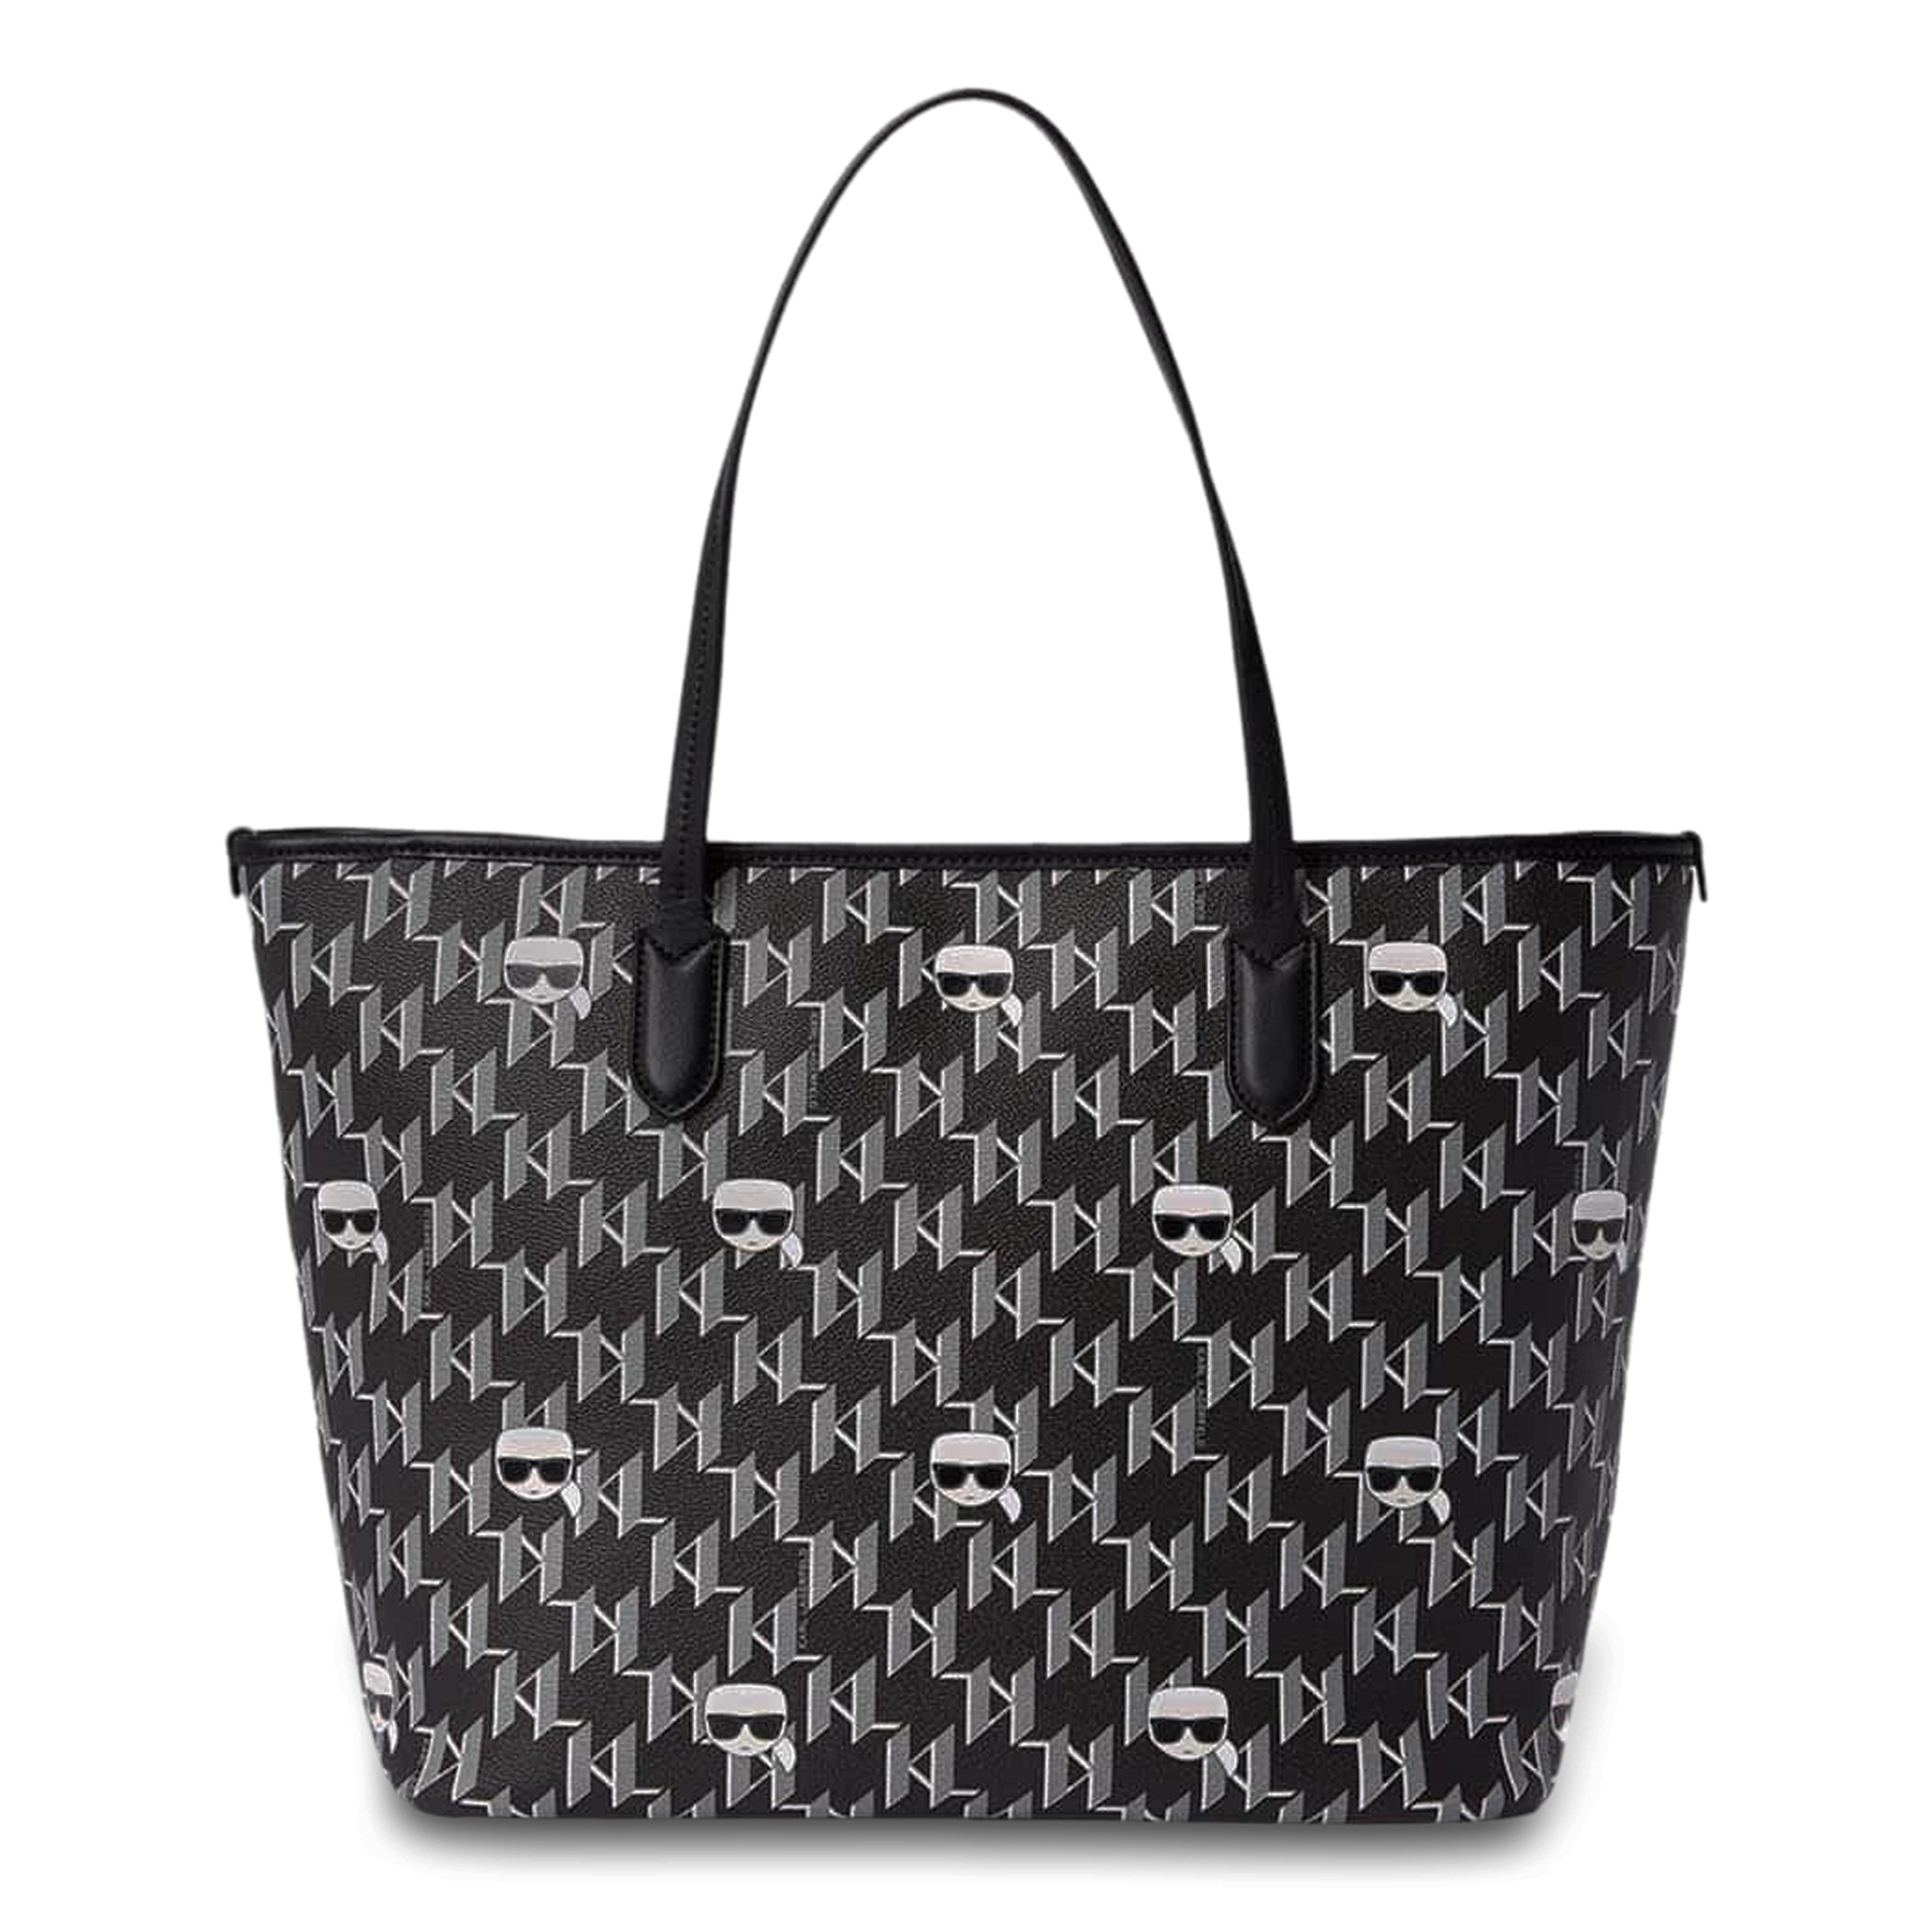 Karl Lagerfeld Black Shopping bags for Women - 225W3026